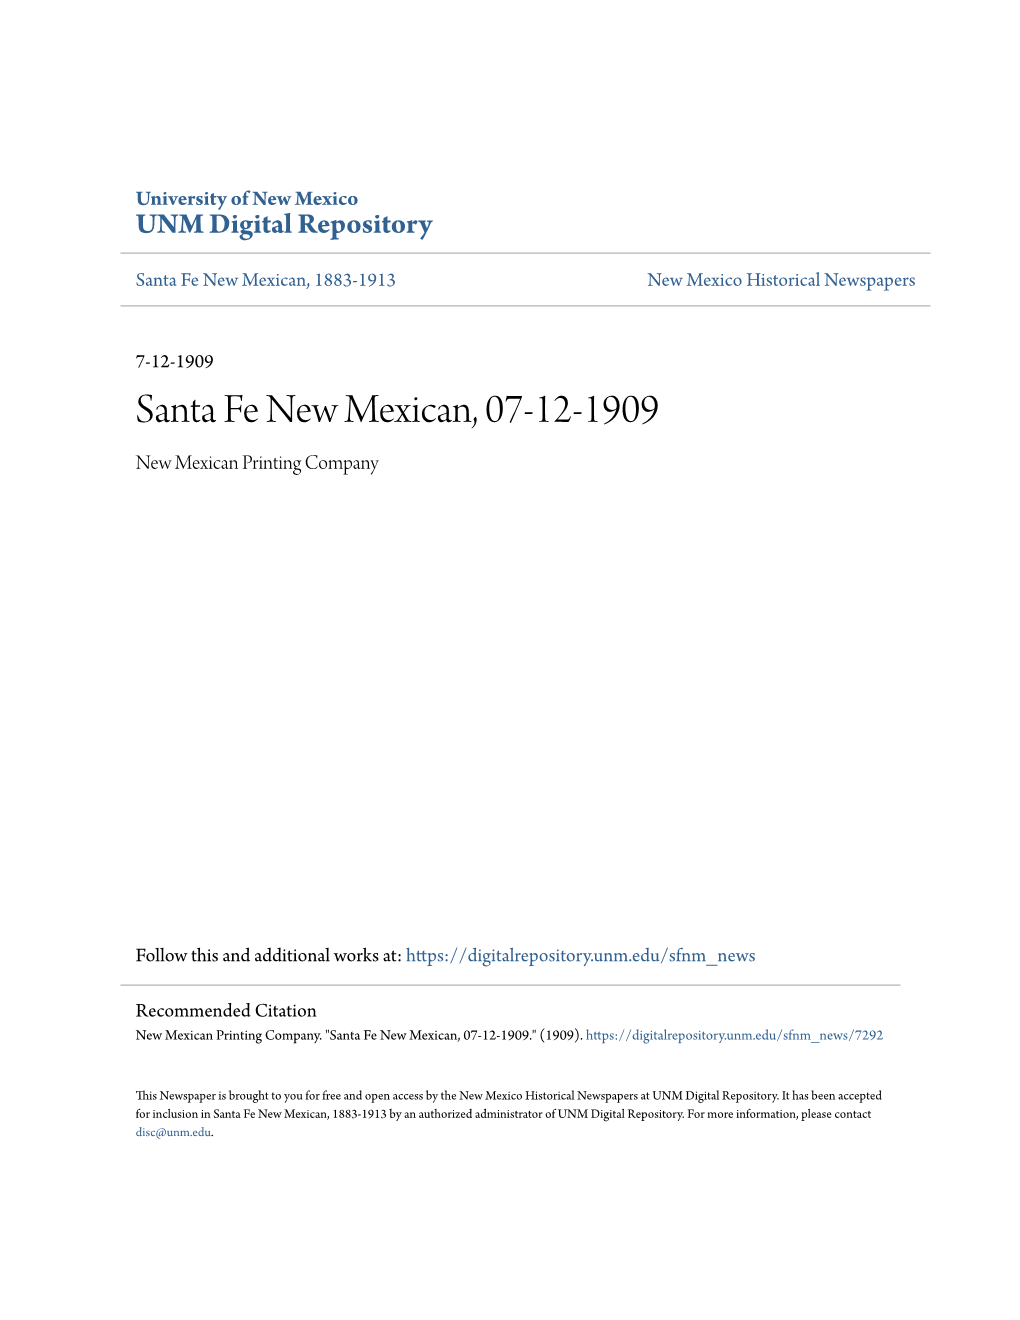 Santa Fe New Mexican, 07-12-1909 New Mexican Printing Company